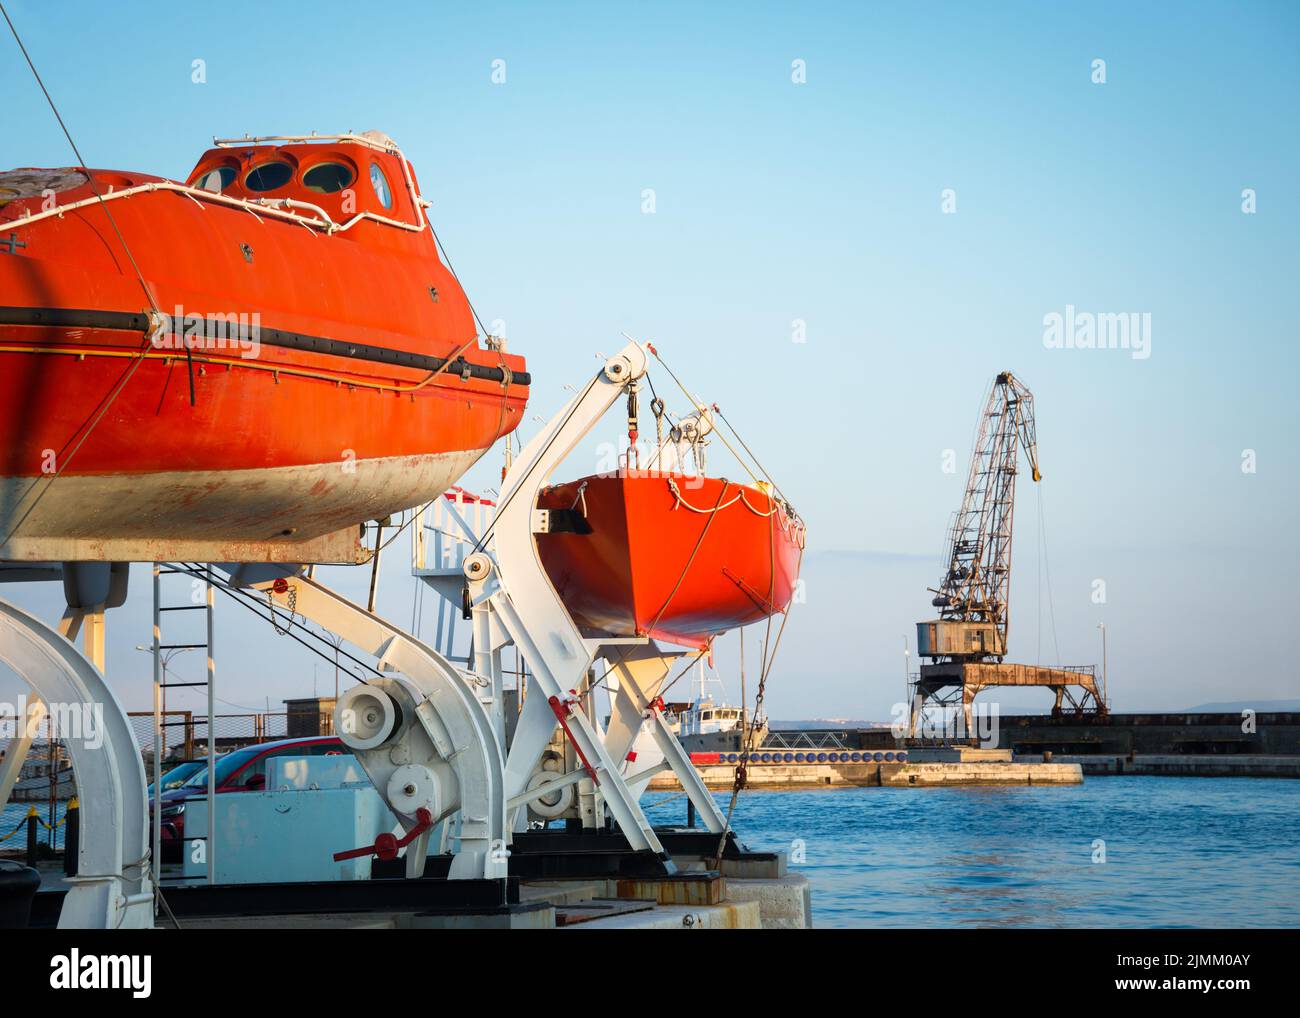 Lifeboat secured to large ship in the port of Rijeka,Croatia Stock Photo